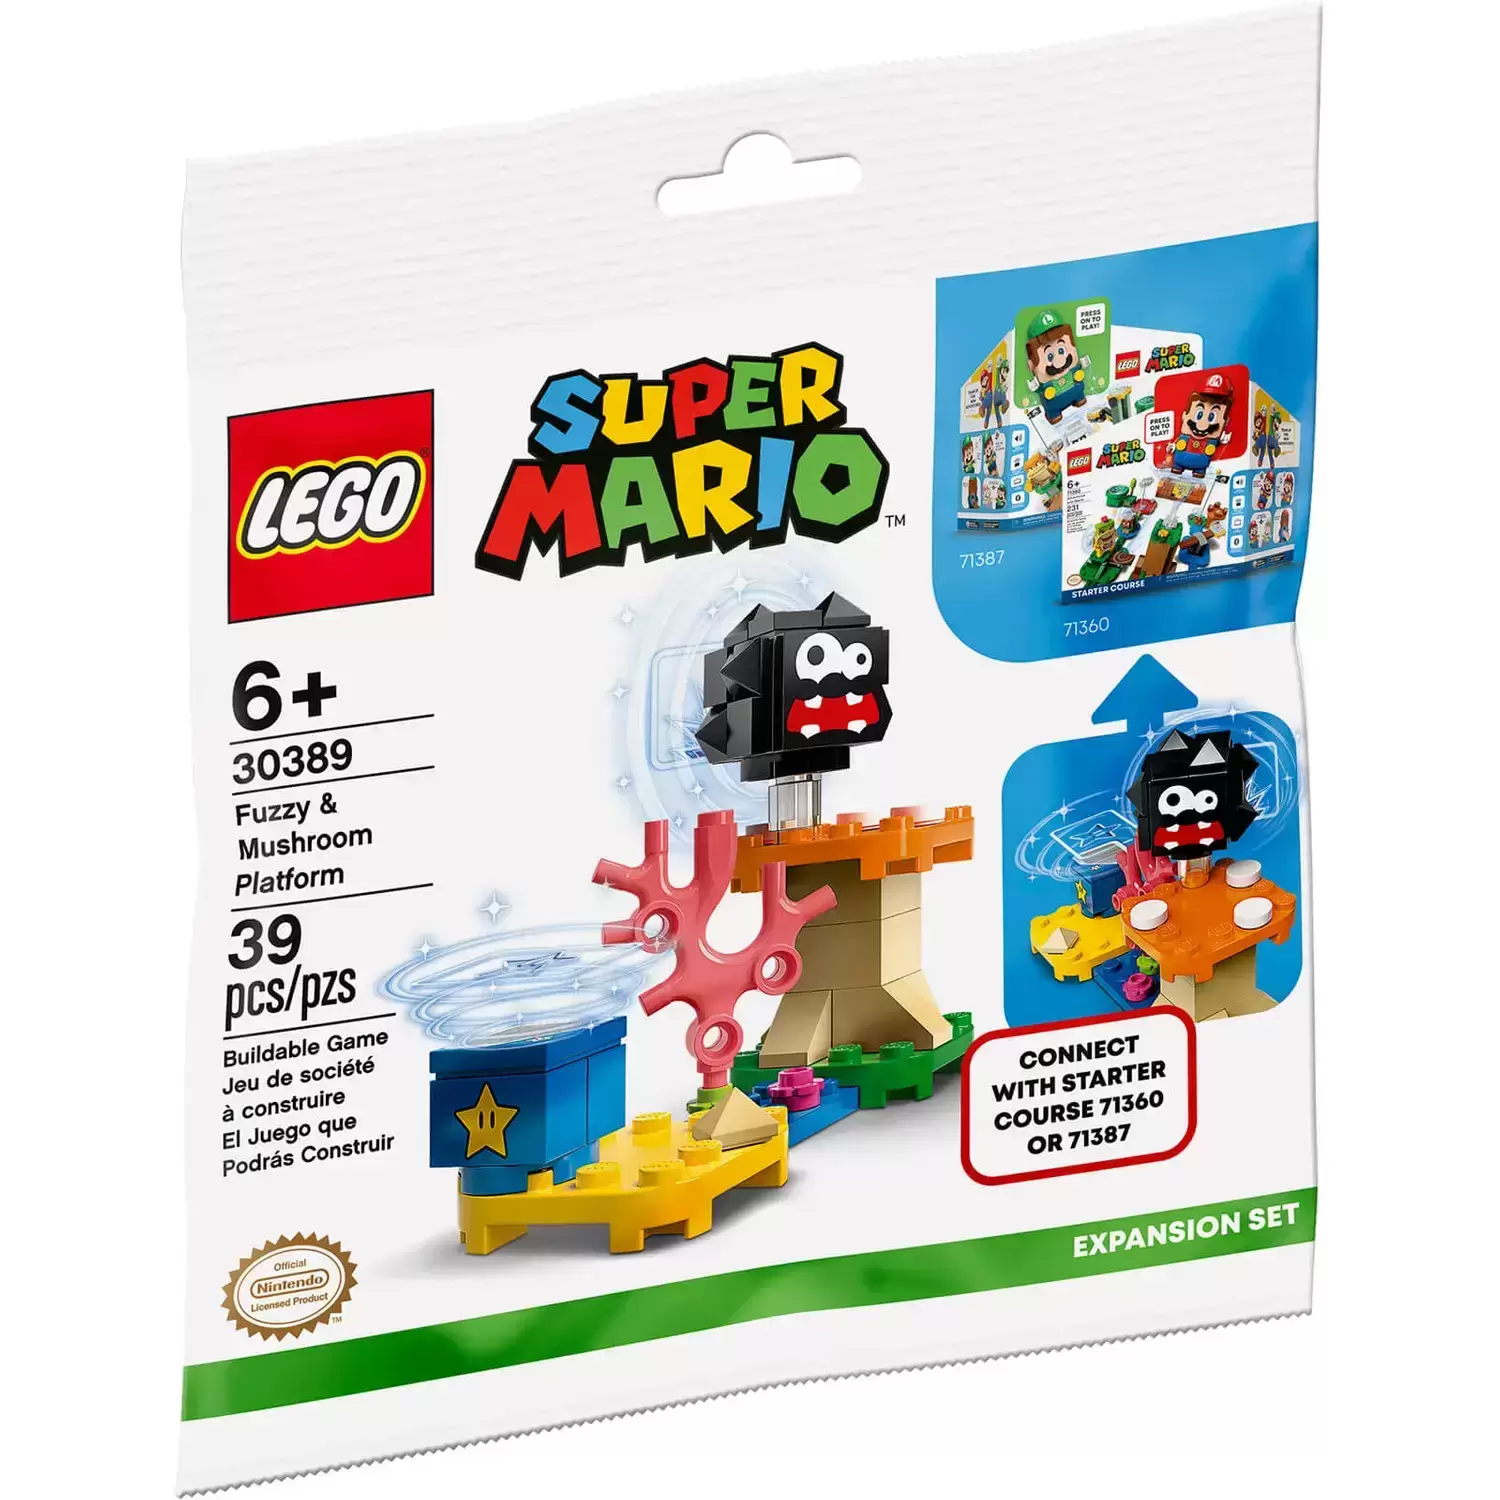 LEGO Super Mario - Fuzzy & Mushroom Platform